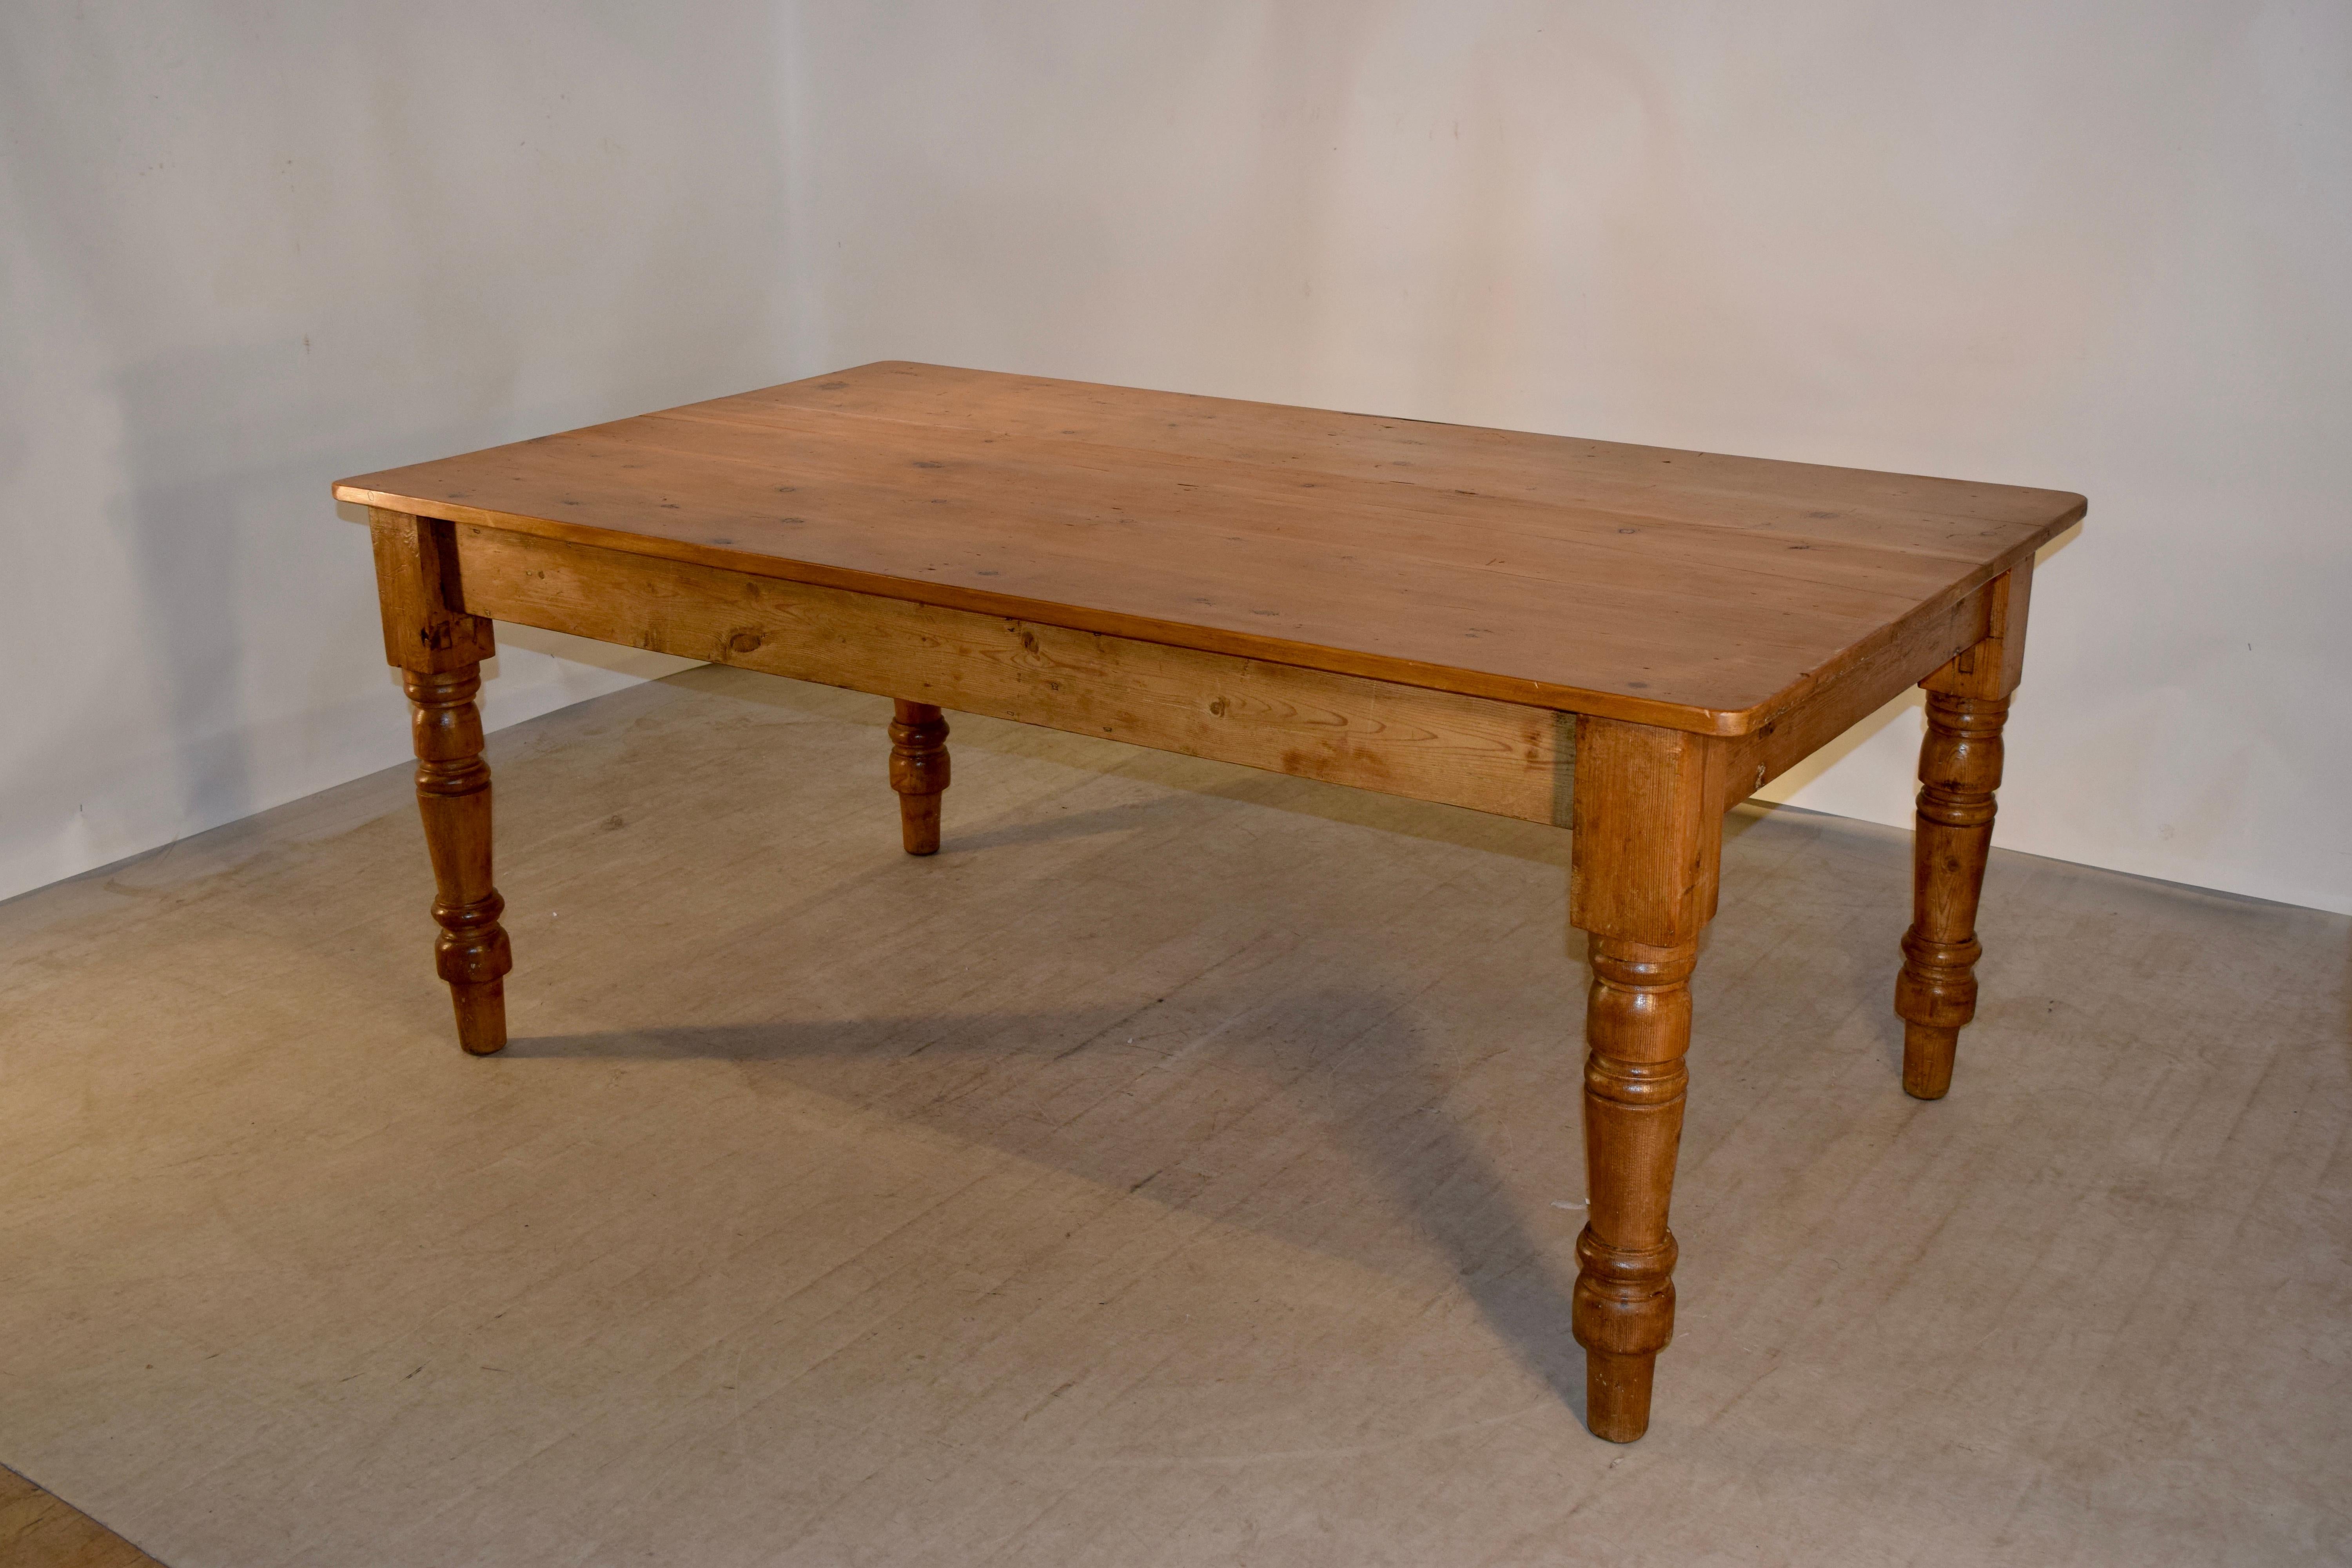 19th Century English Pine Farm Table (Viktorianisch)